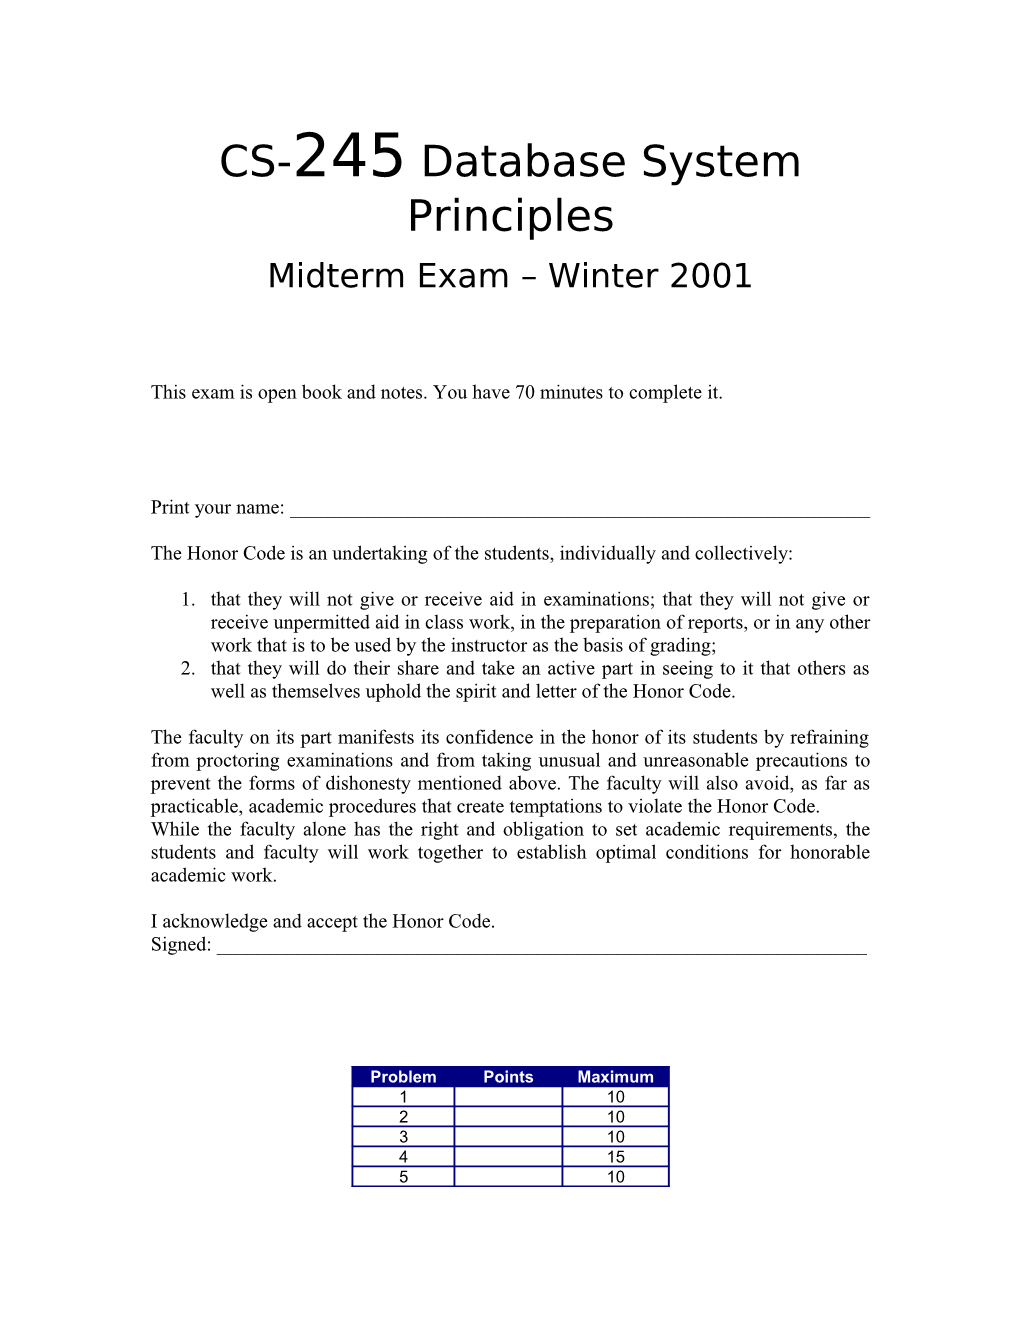 CS-245 Database System Principles